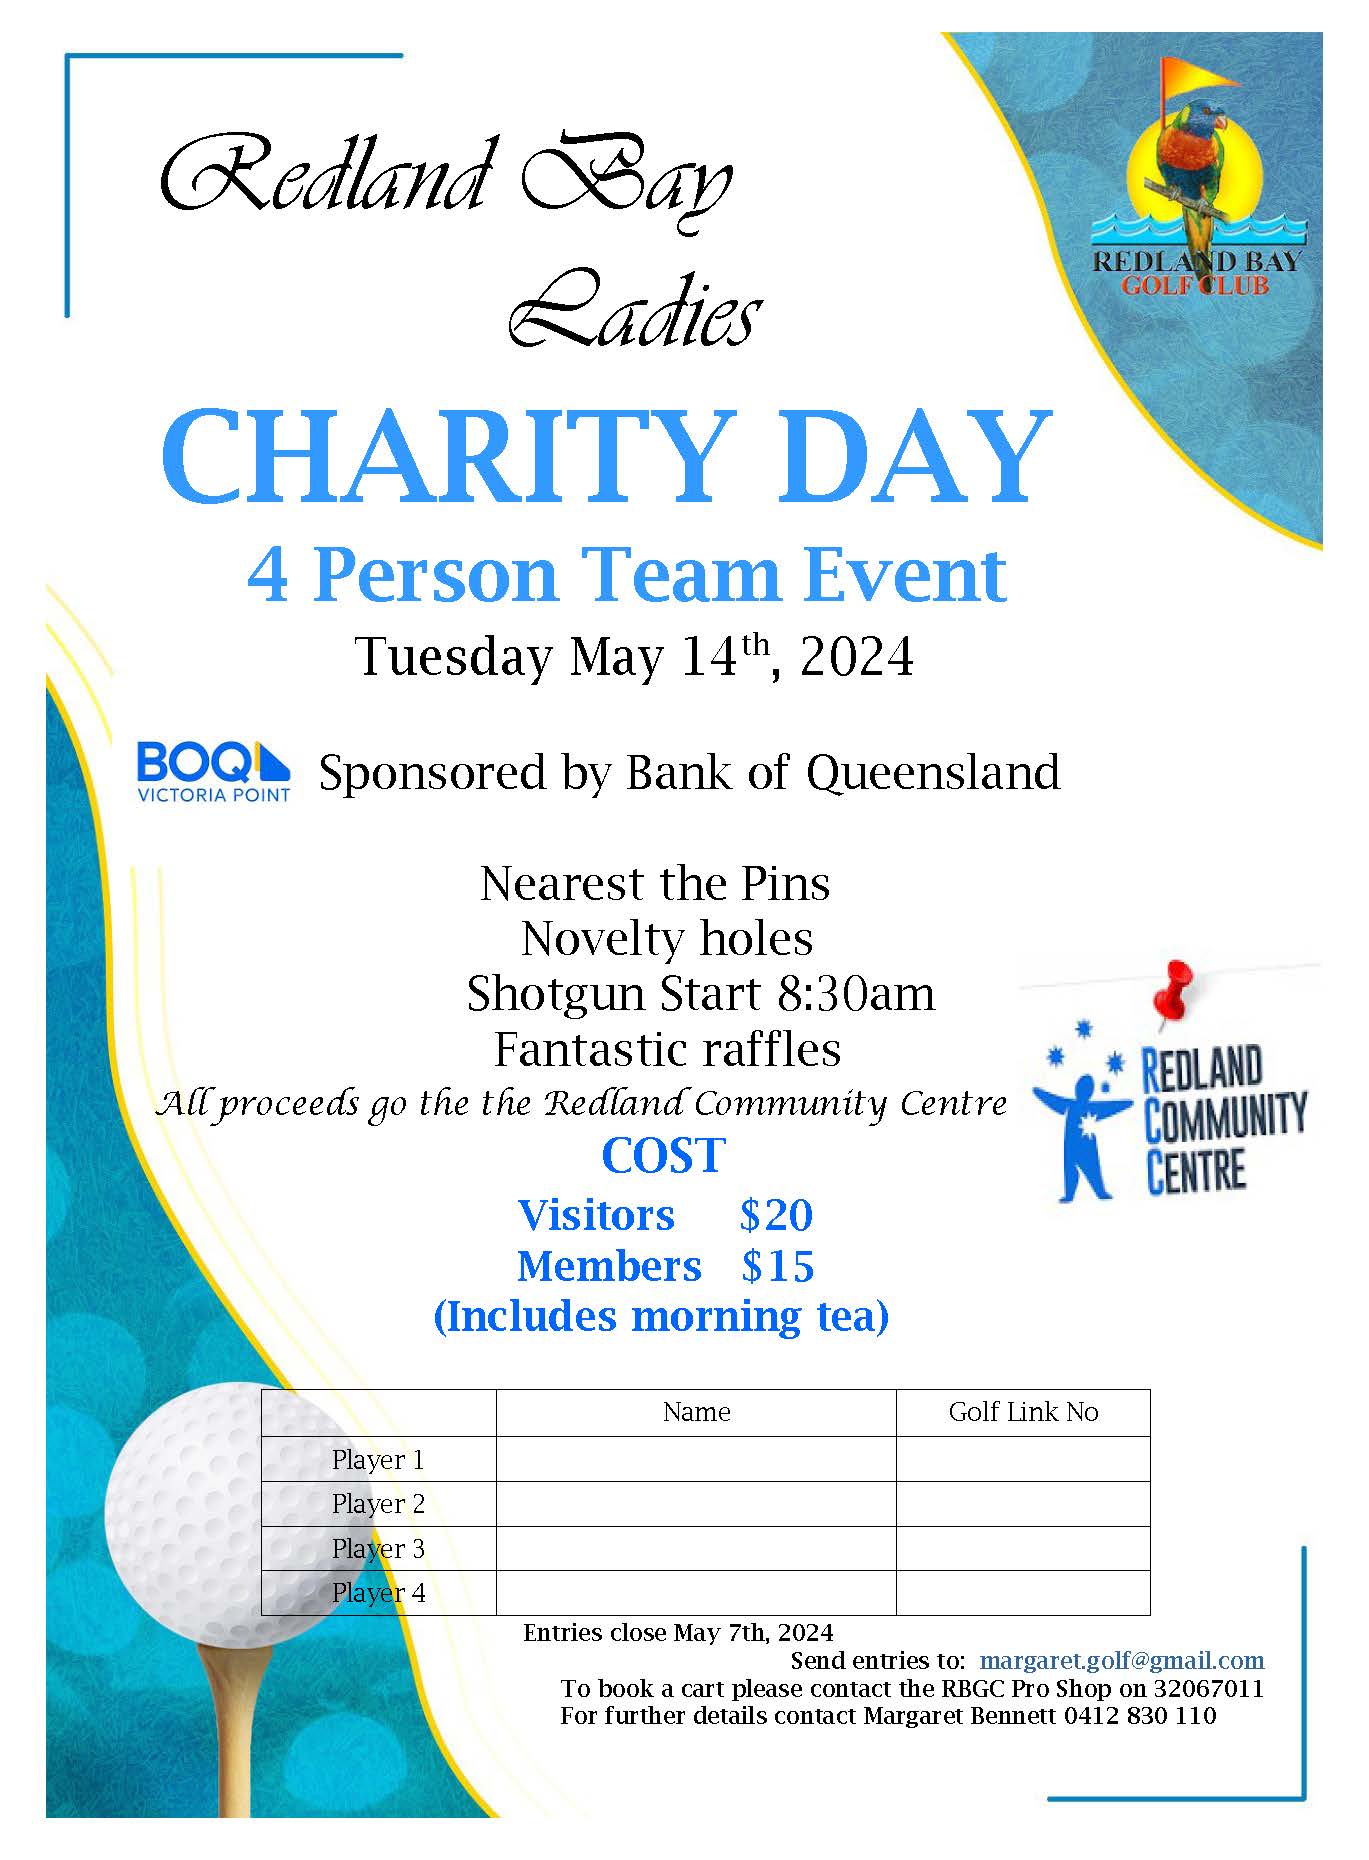 Redland_Bay_Charity_Day_Flyer.jpg